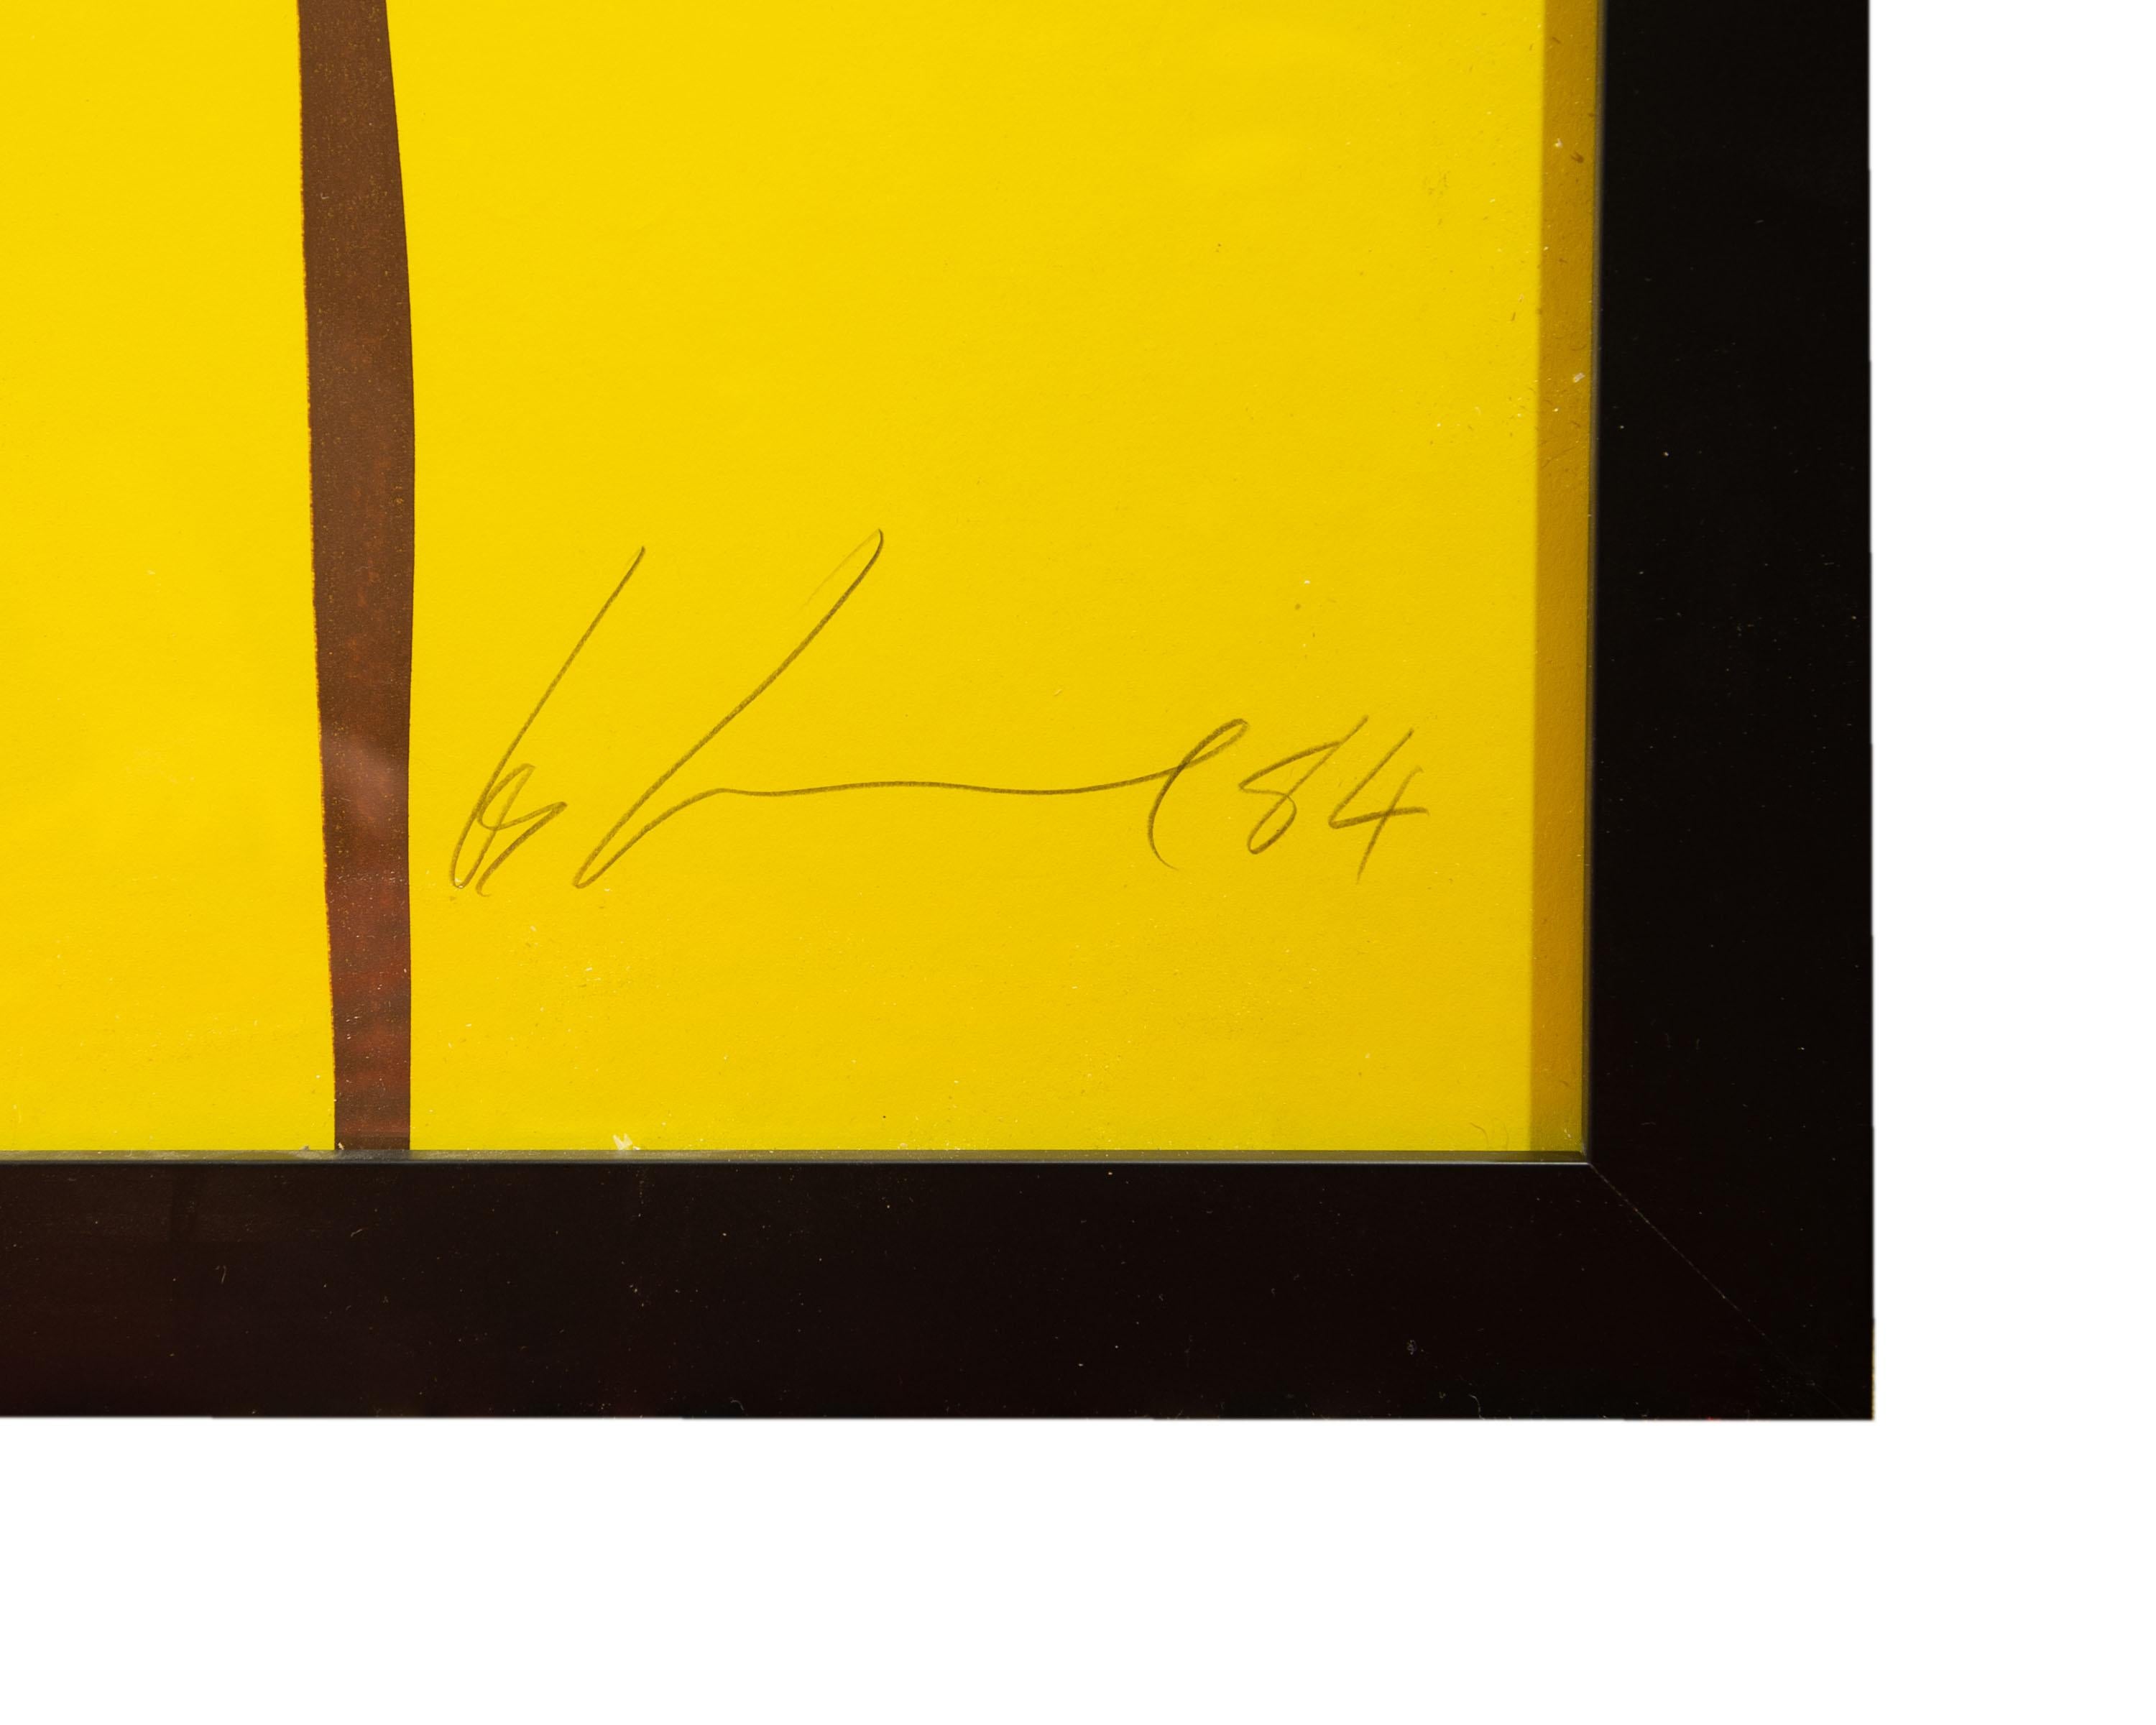 20th Century Les Levine Signed Artist’s Proof “Win” Serigraph Pop Art Print